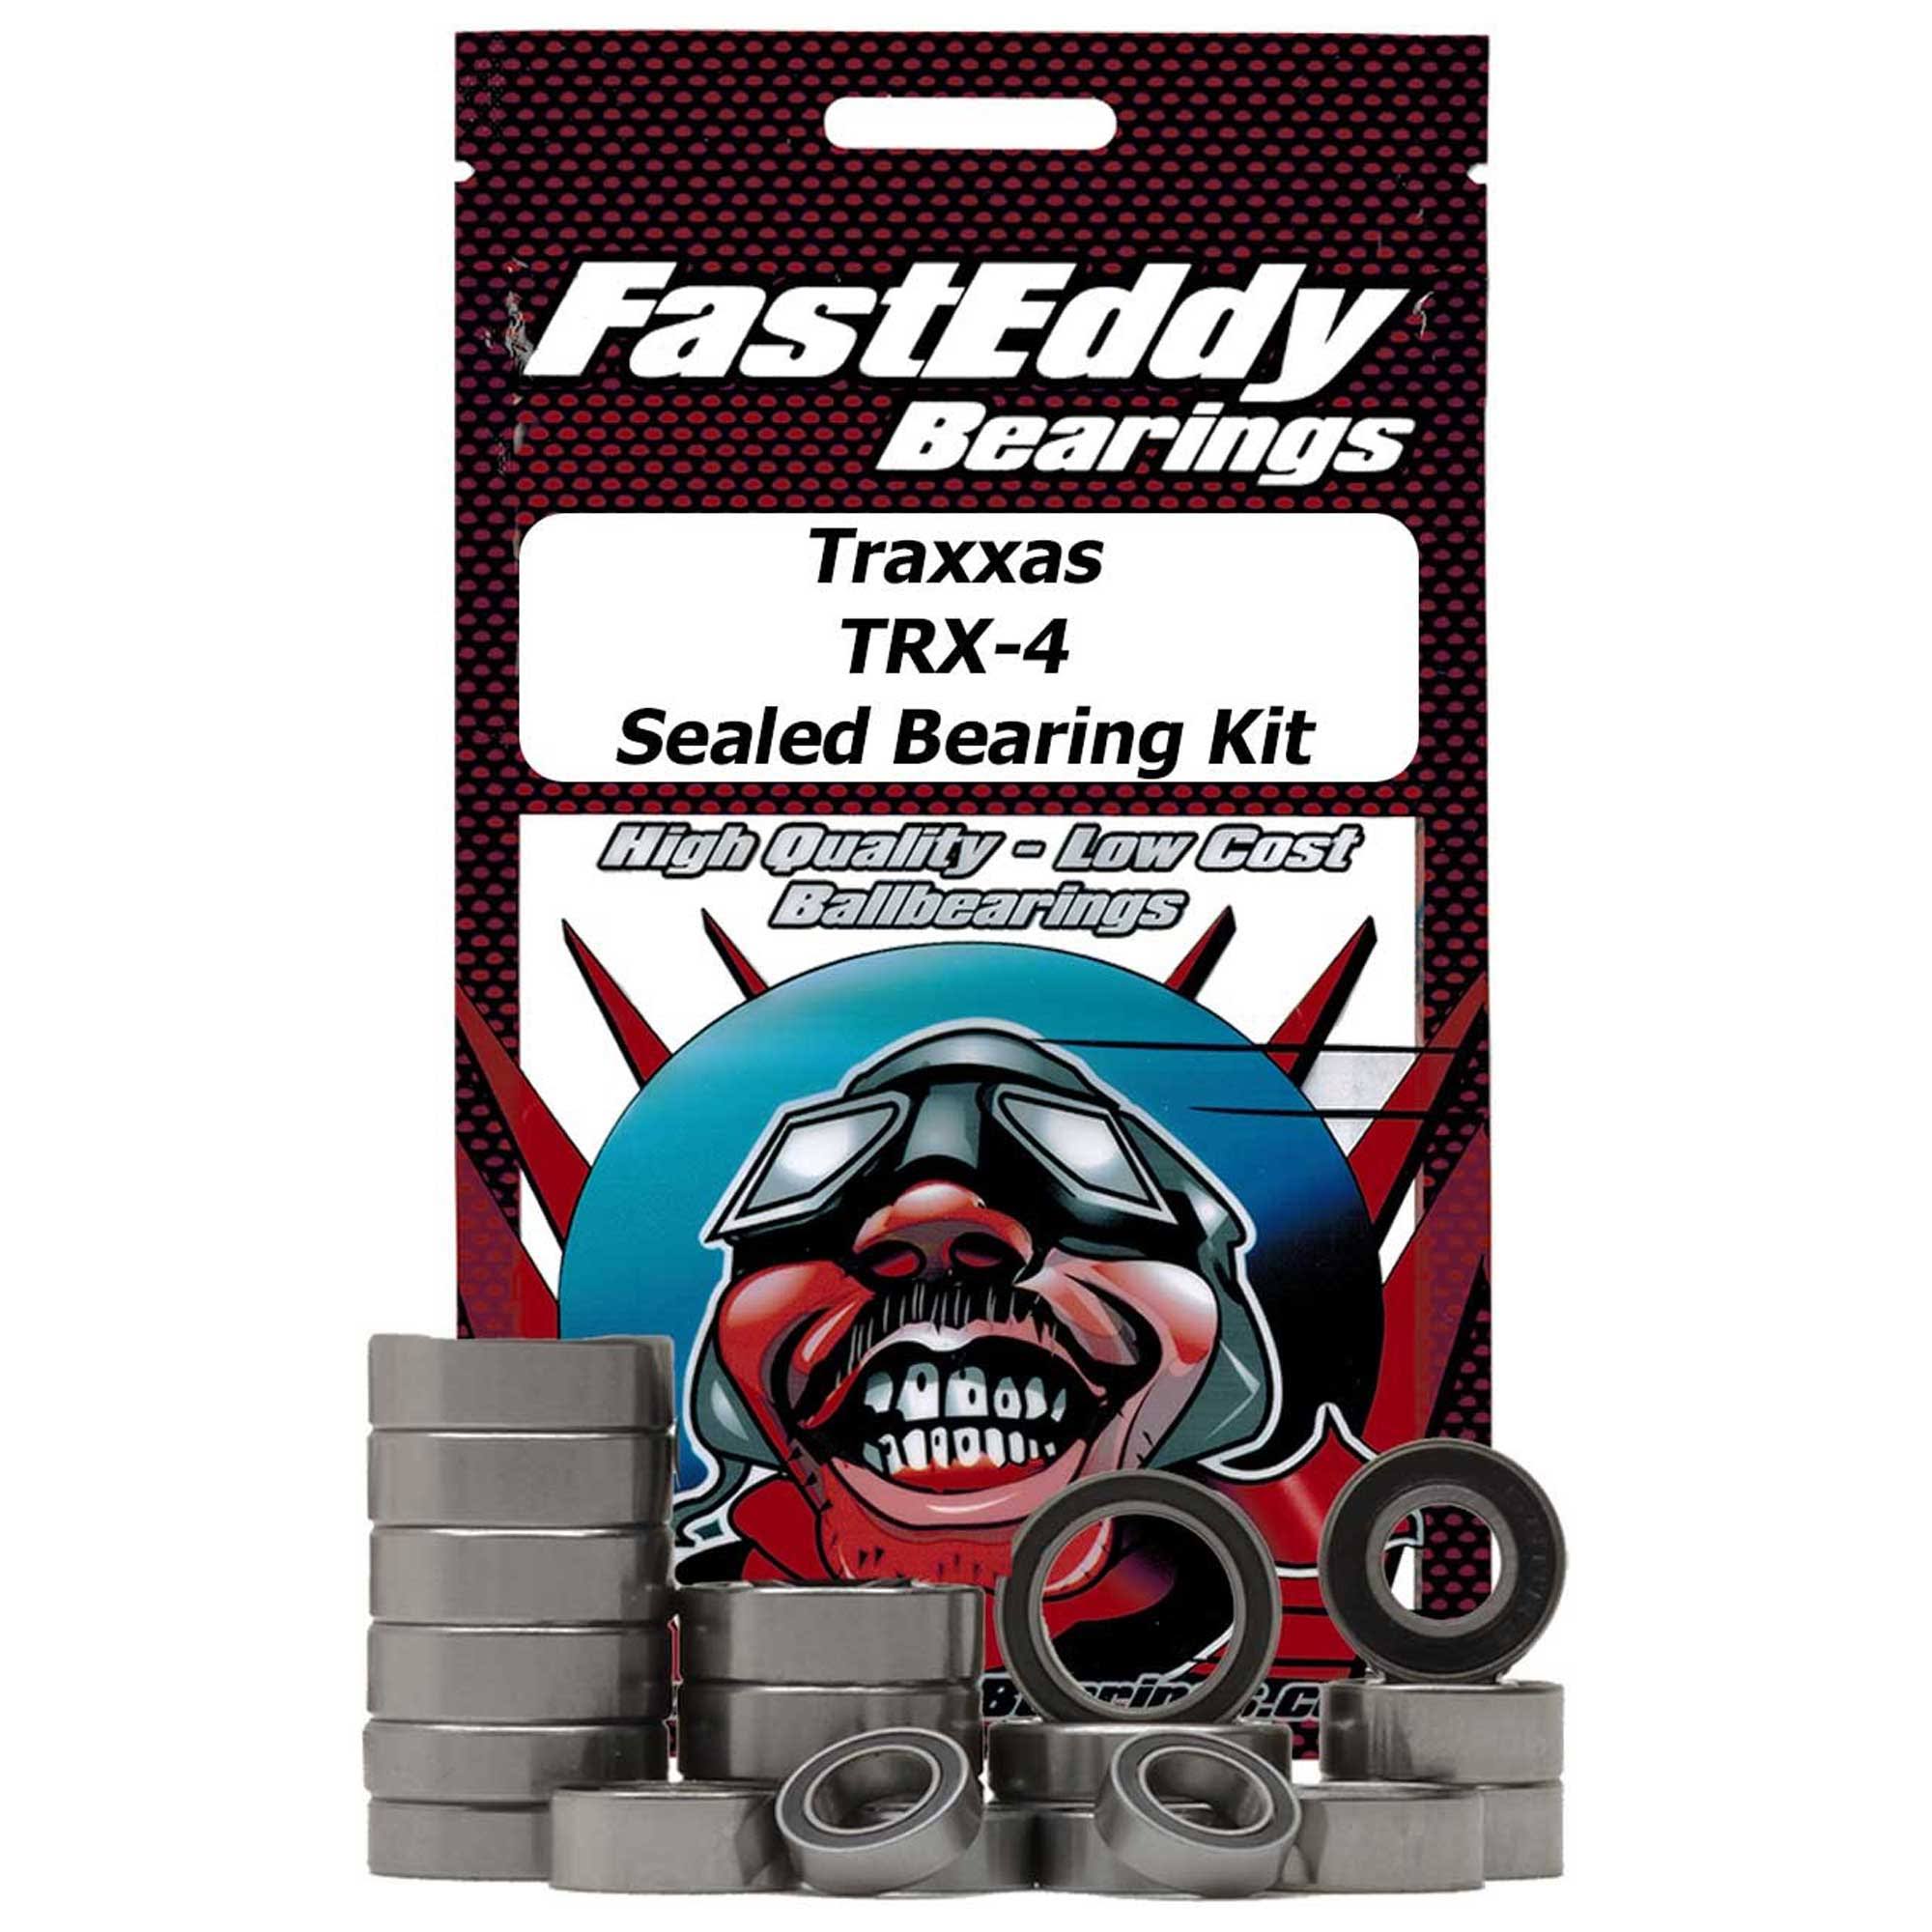 FastEddy Bearings Sealed Bearing Kit: Traxxas TRX-4, TFE4522